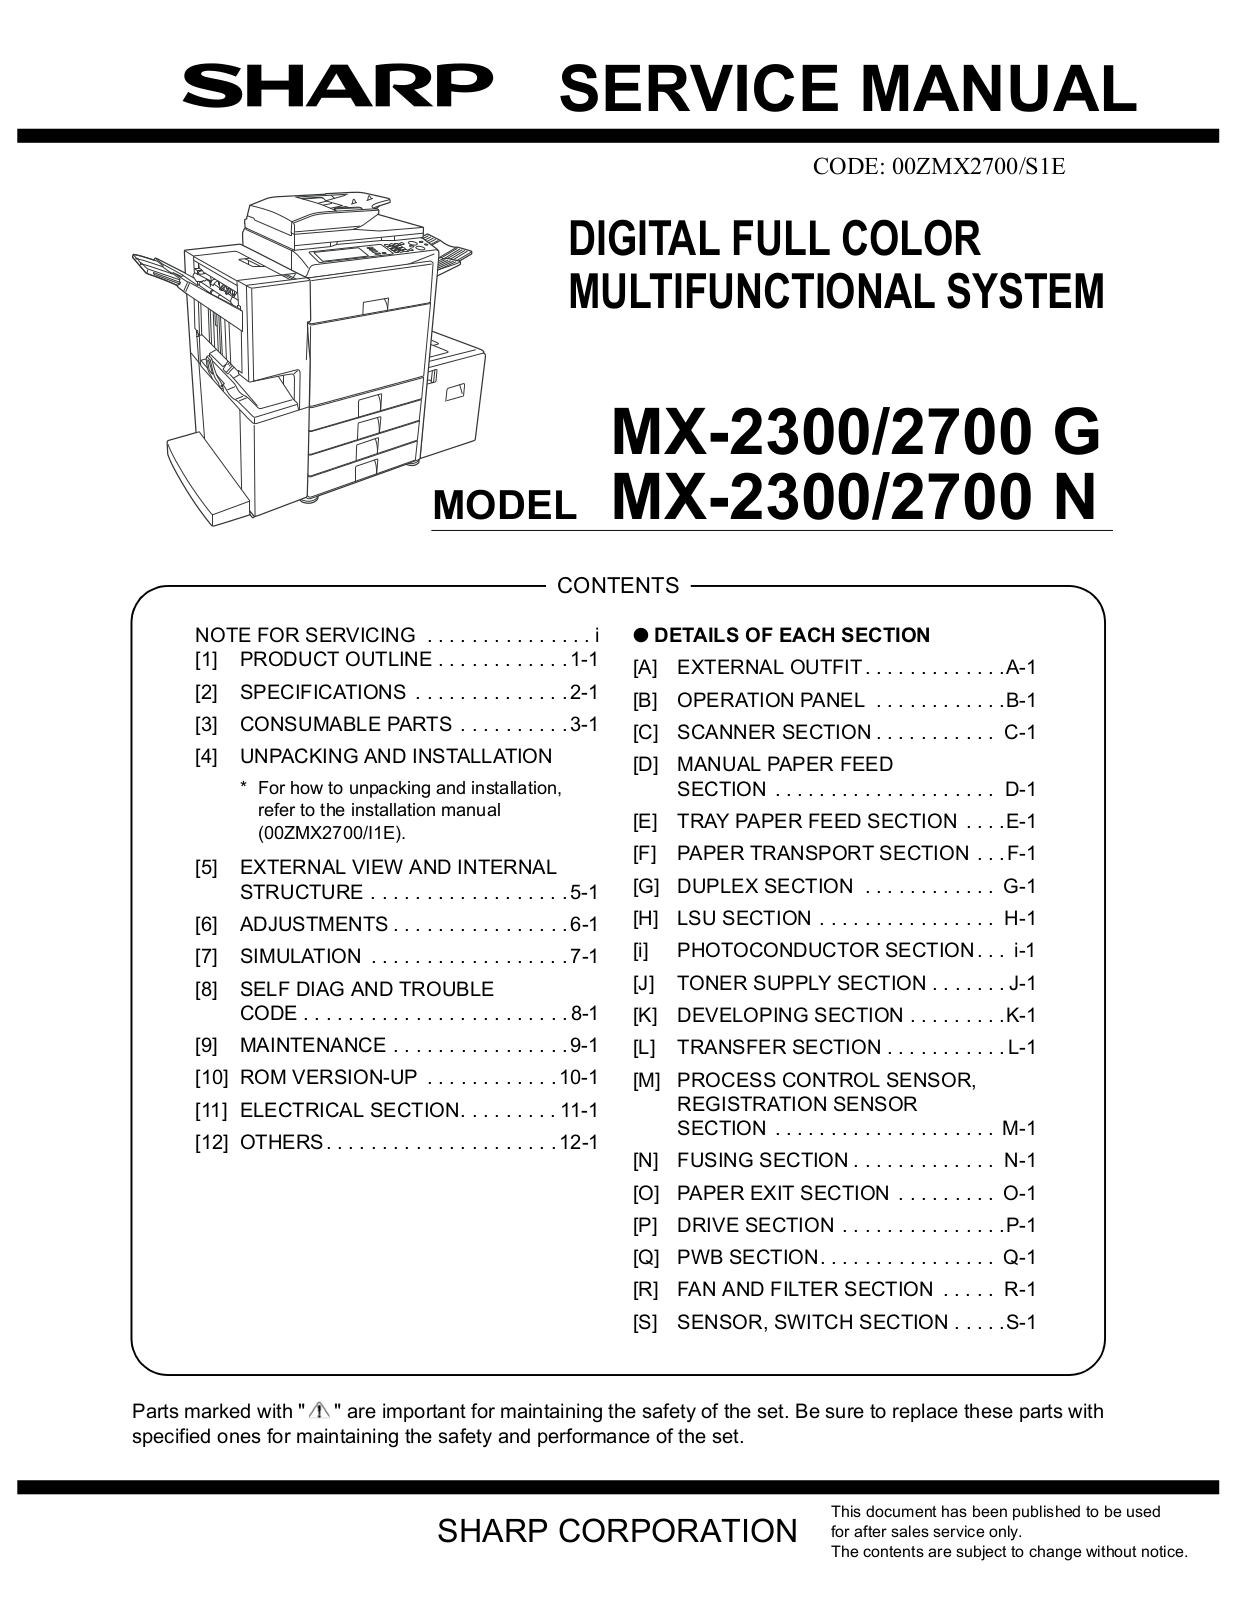 Sharp MX-2300G, MX-2700G, MX-2300N, MX-2700N Service Manual